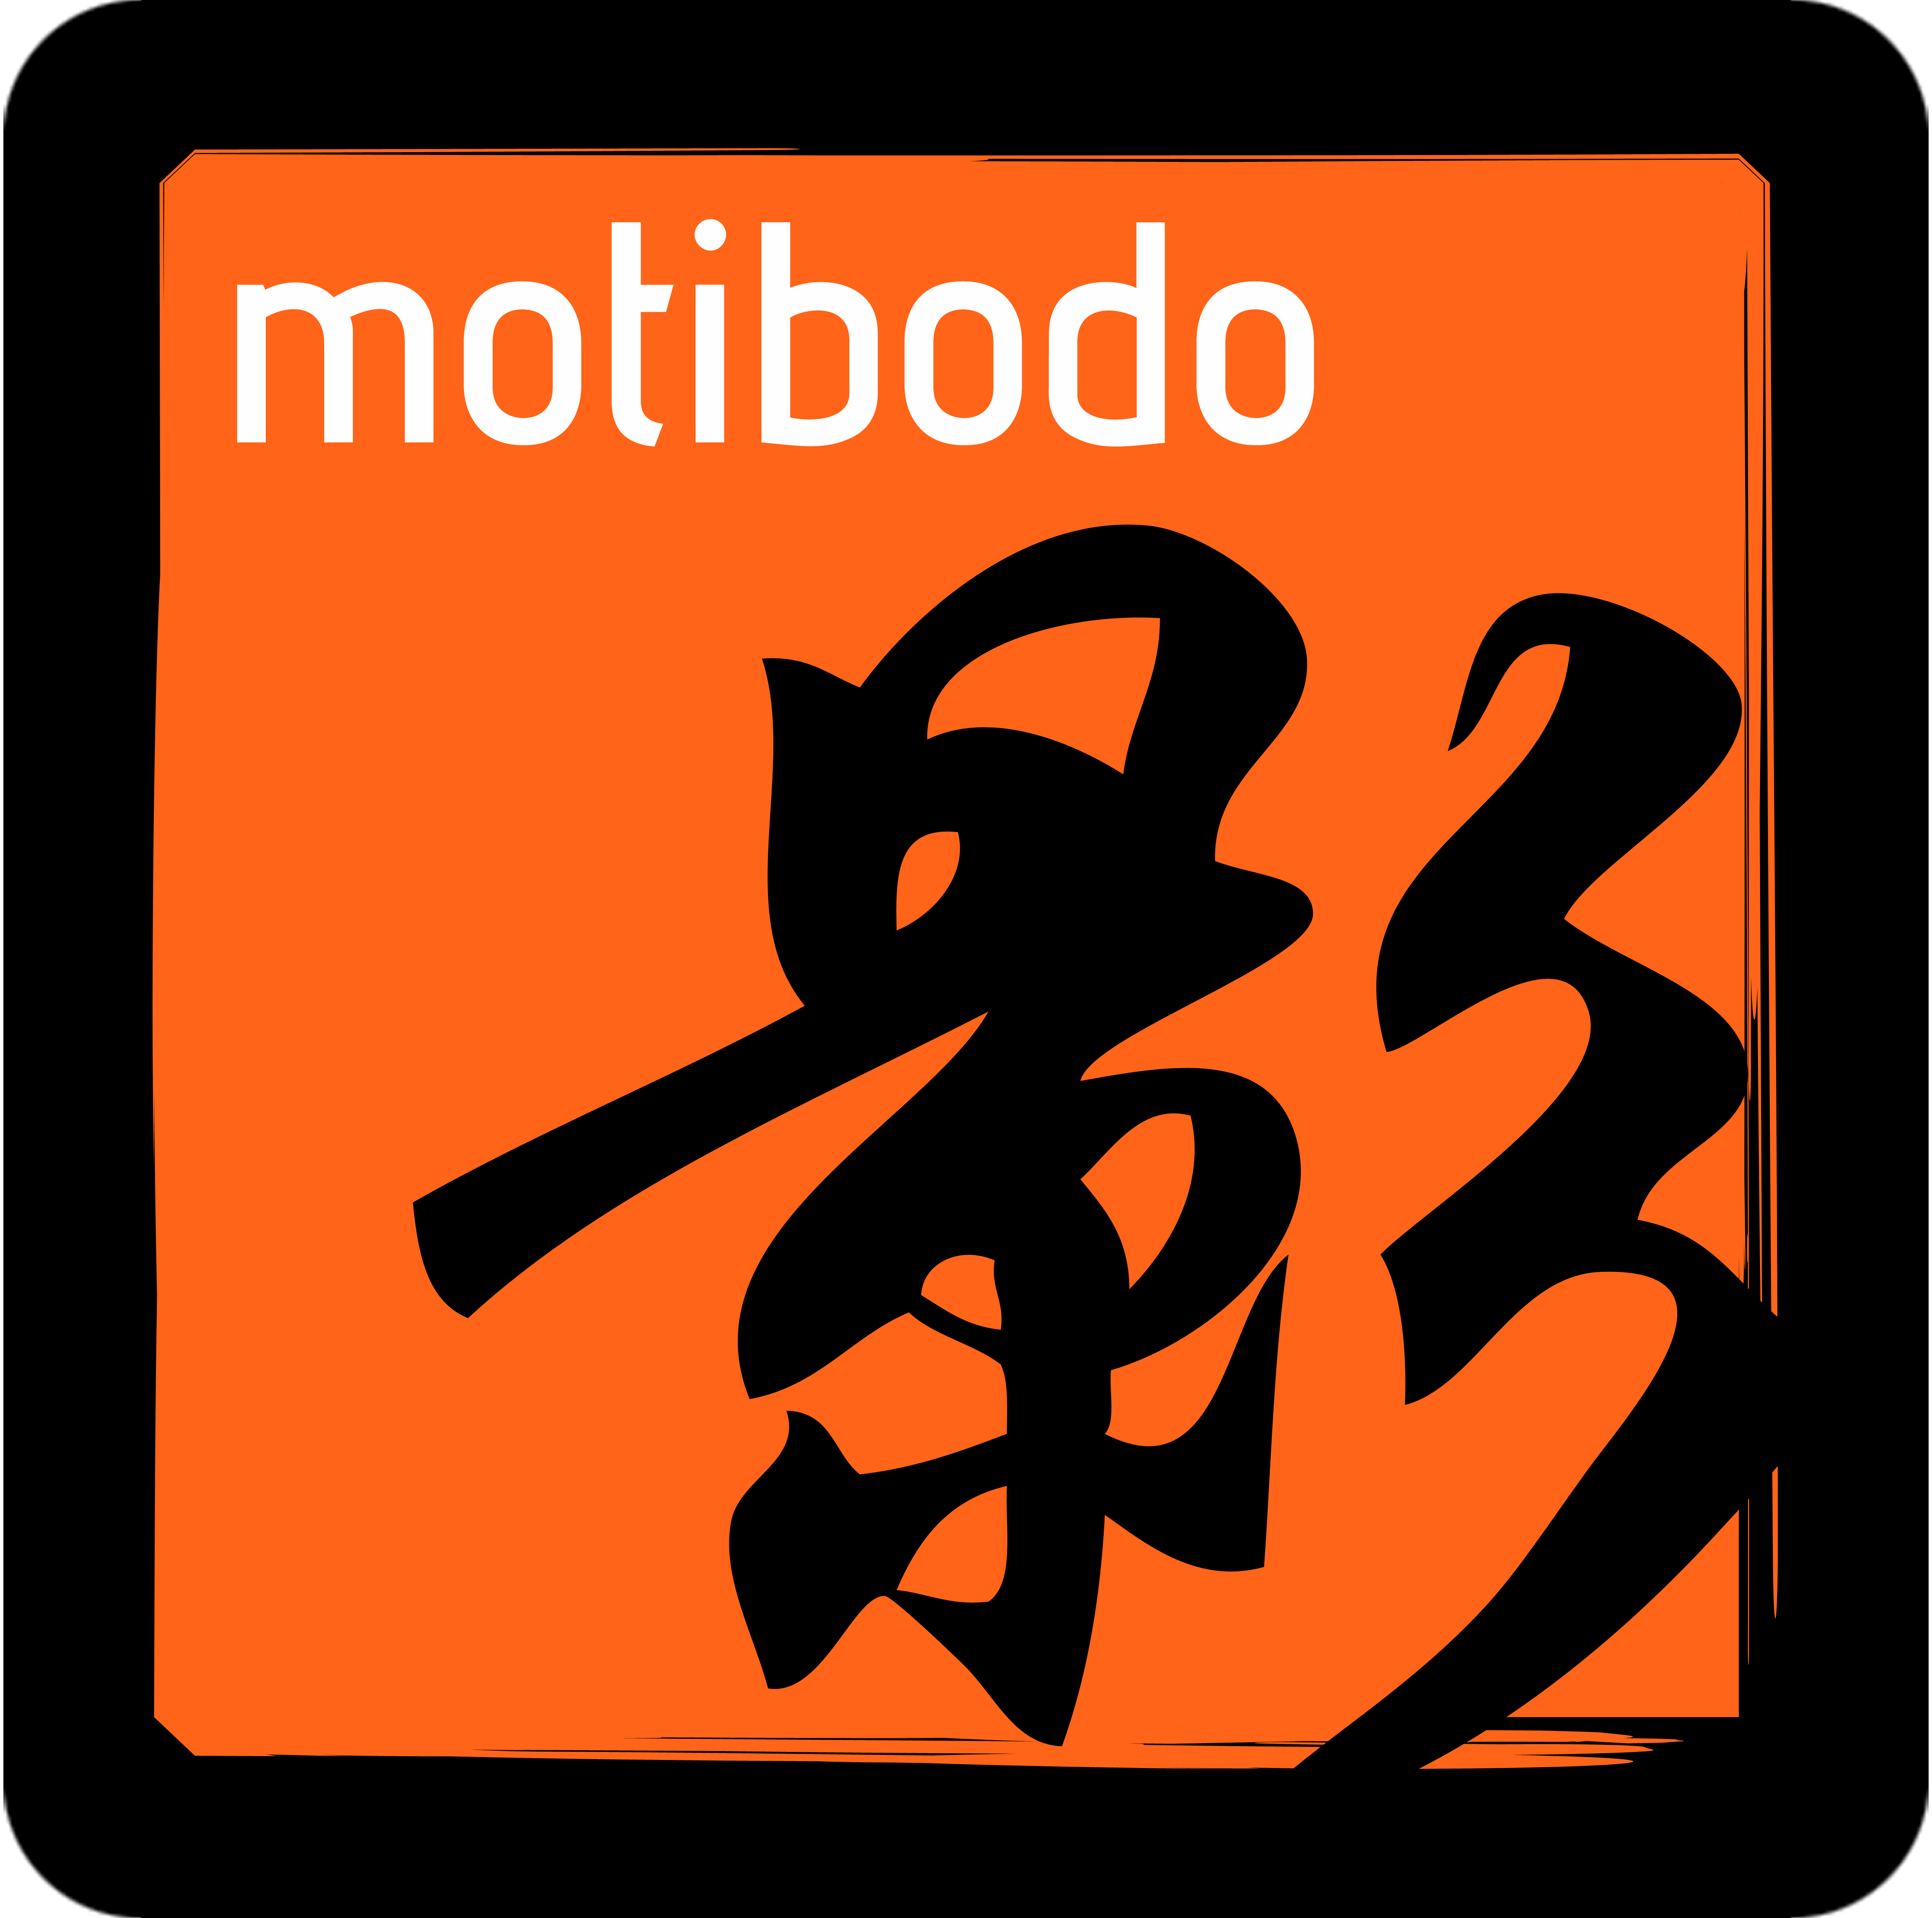 Motibodo